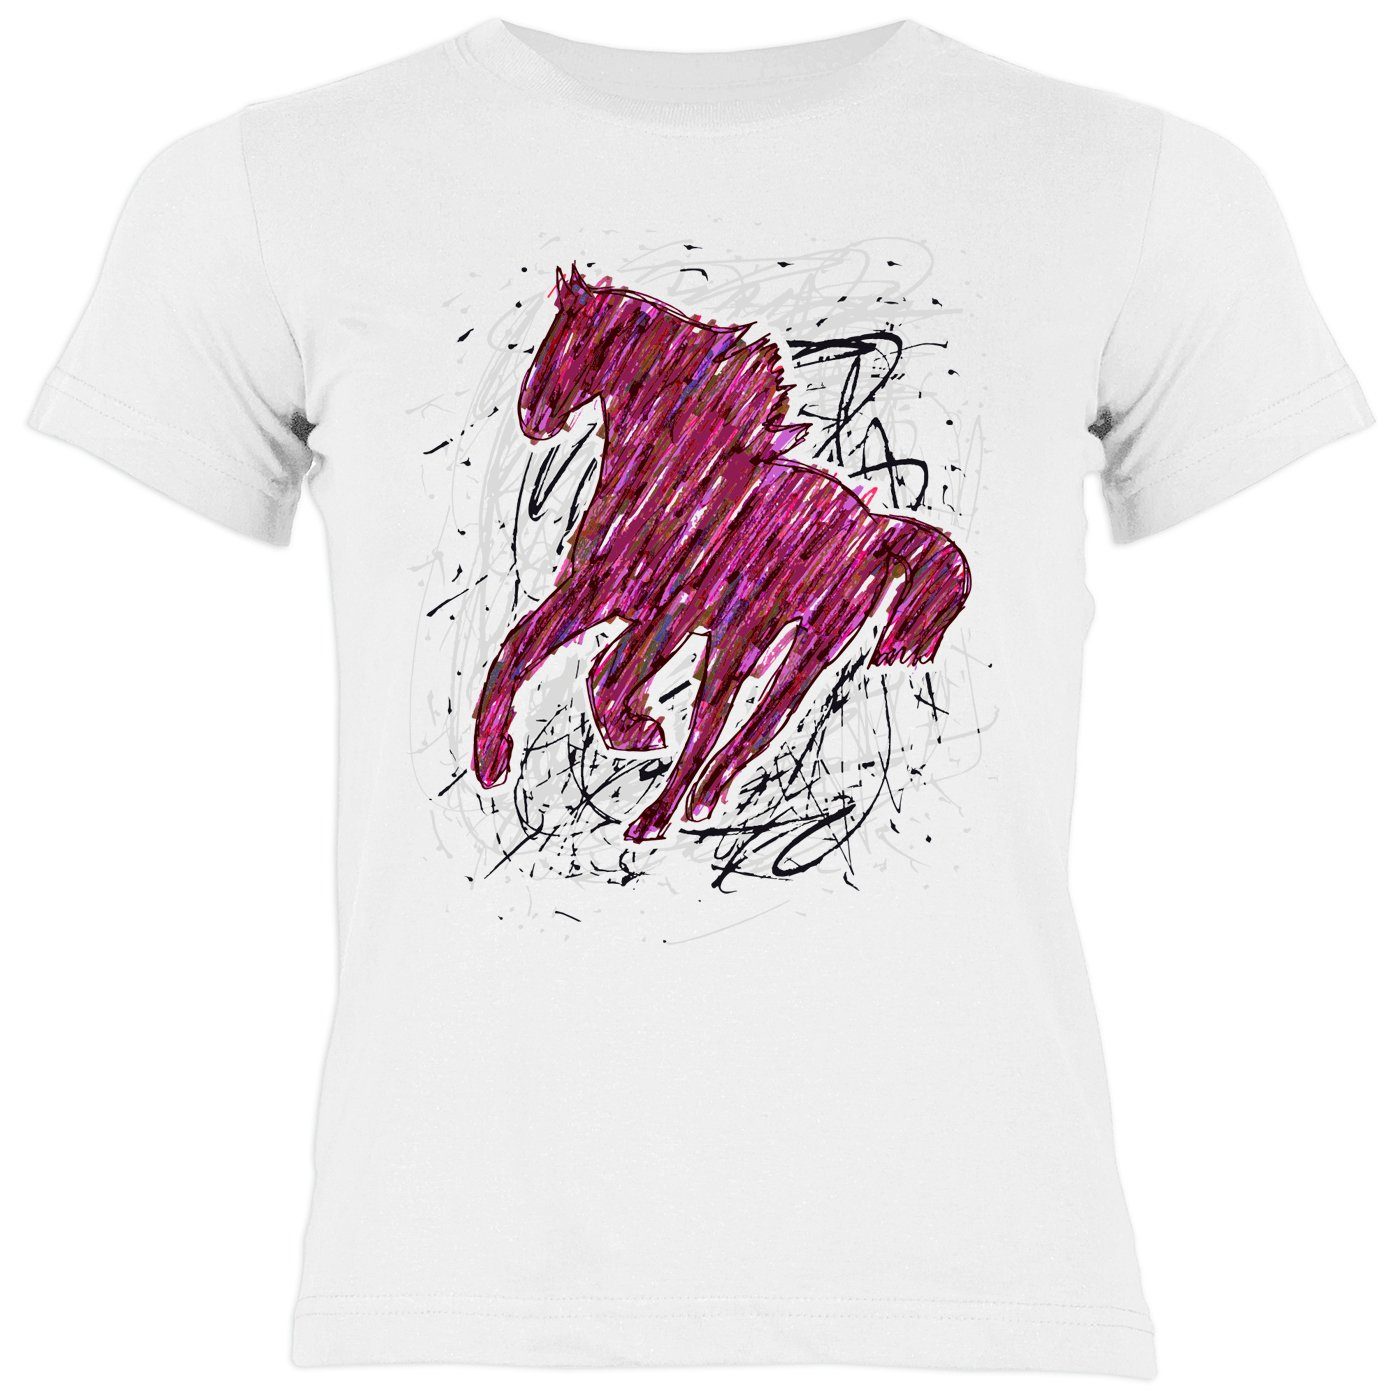 Kindershirt bunt, Pferd Pferde Shirt rosa - T-Shirt Kindershirt Shirts Motiv Zeichnung Pferde Tini :